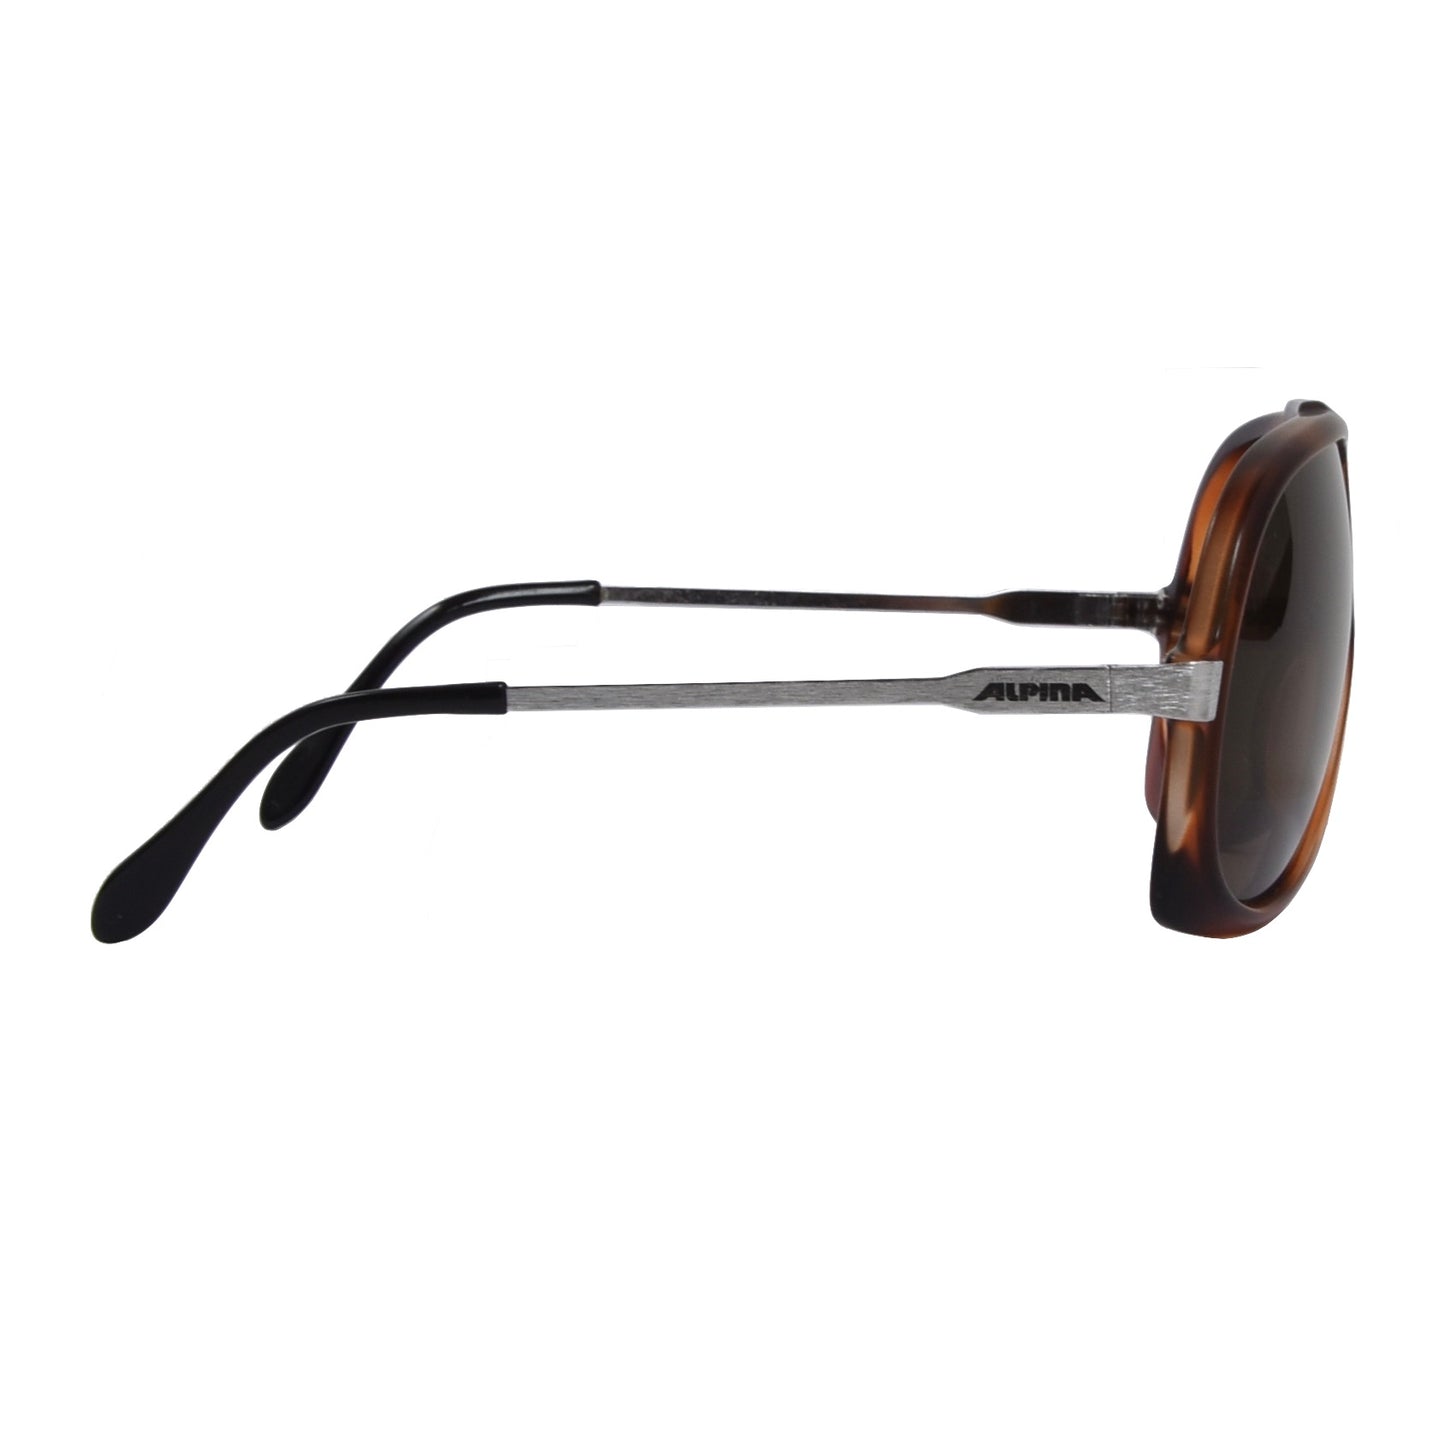 Vintage Alpina Pilot 2 Sunglasses - Tortoise